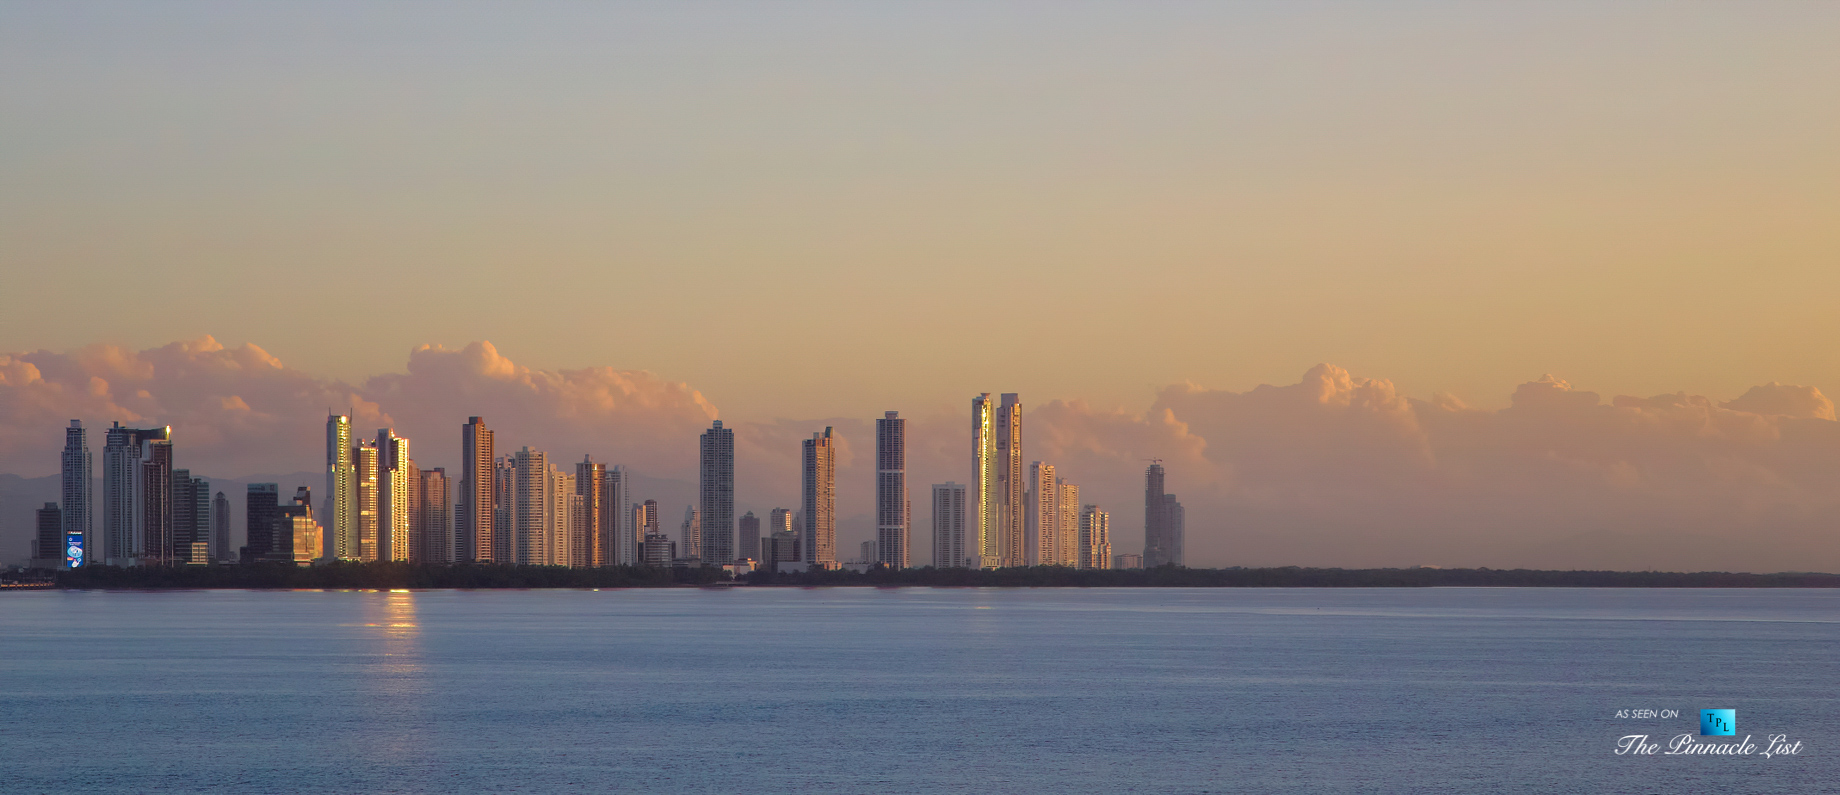 C3 Villa - Ocean Reef Islands, Panama - Luxury Real Estate - Panorama